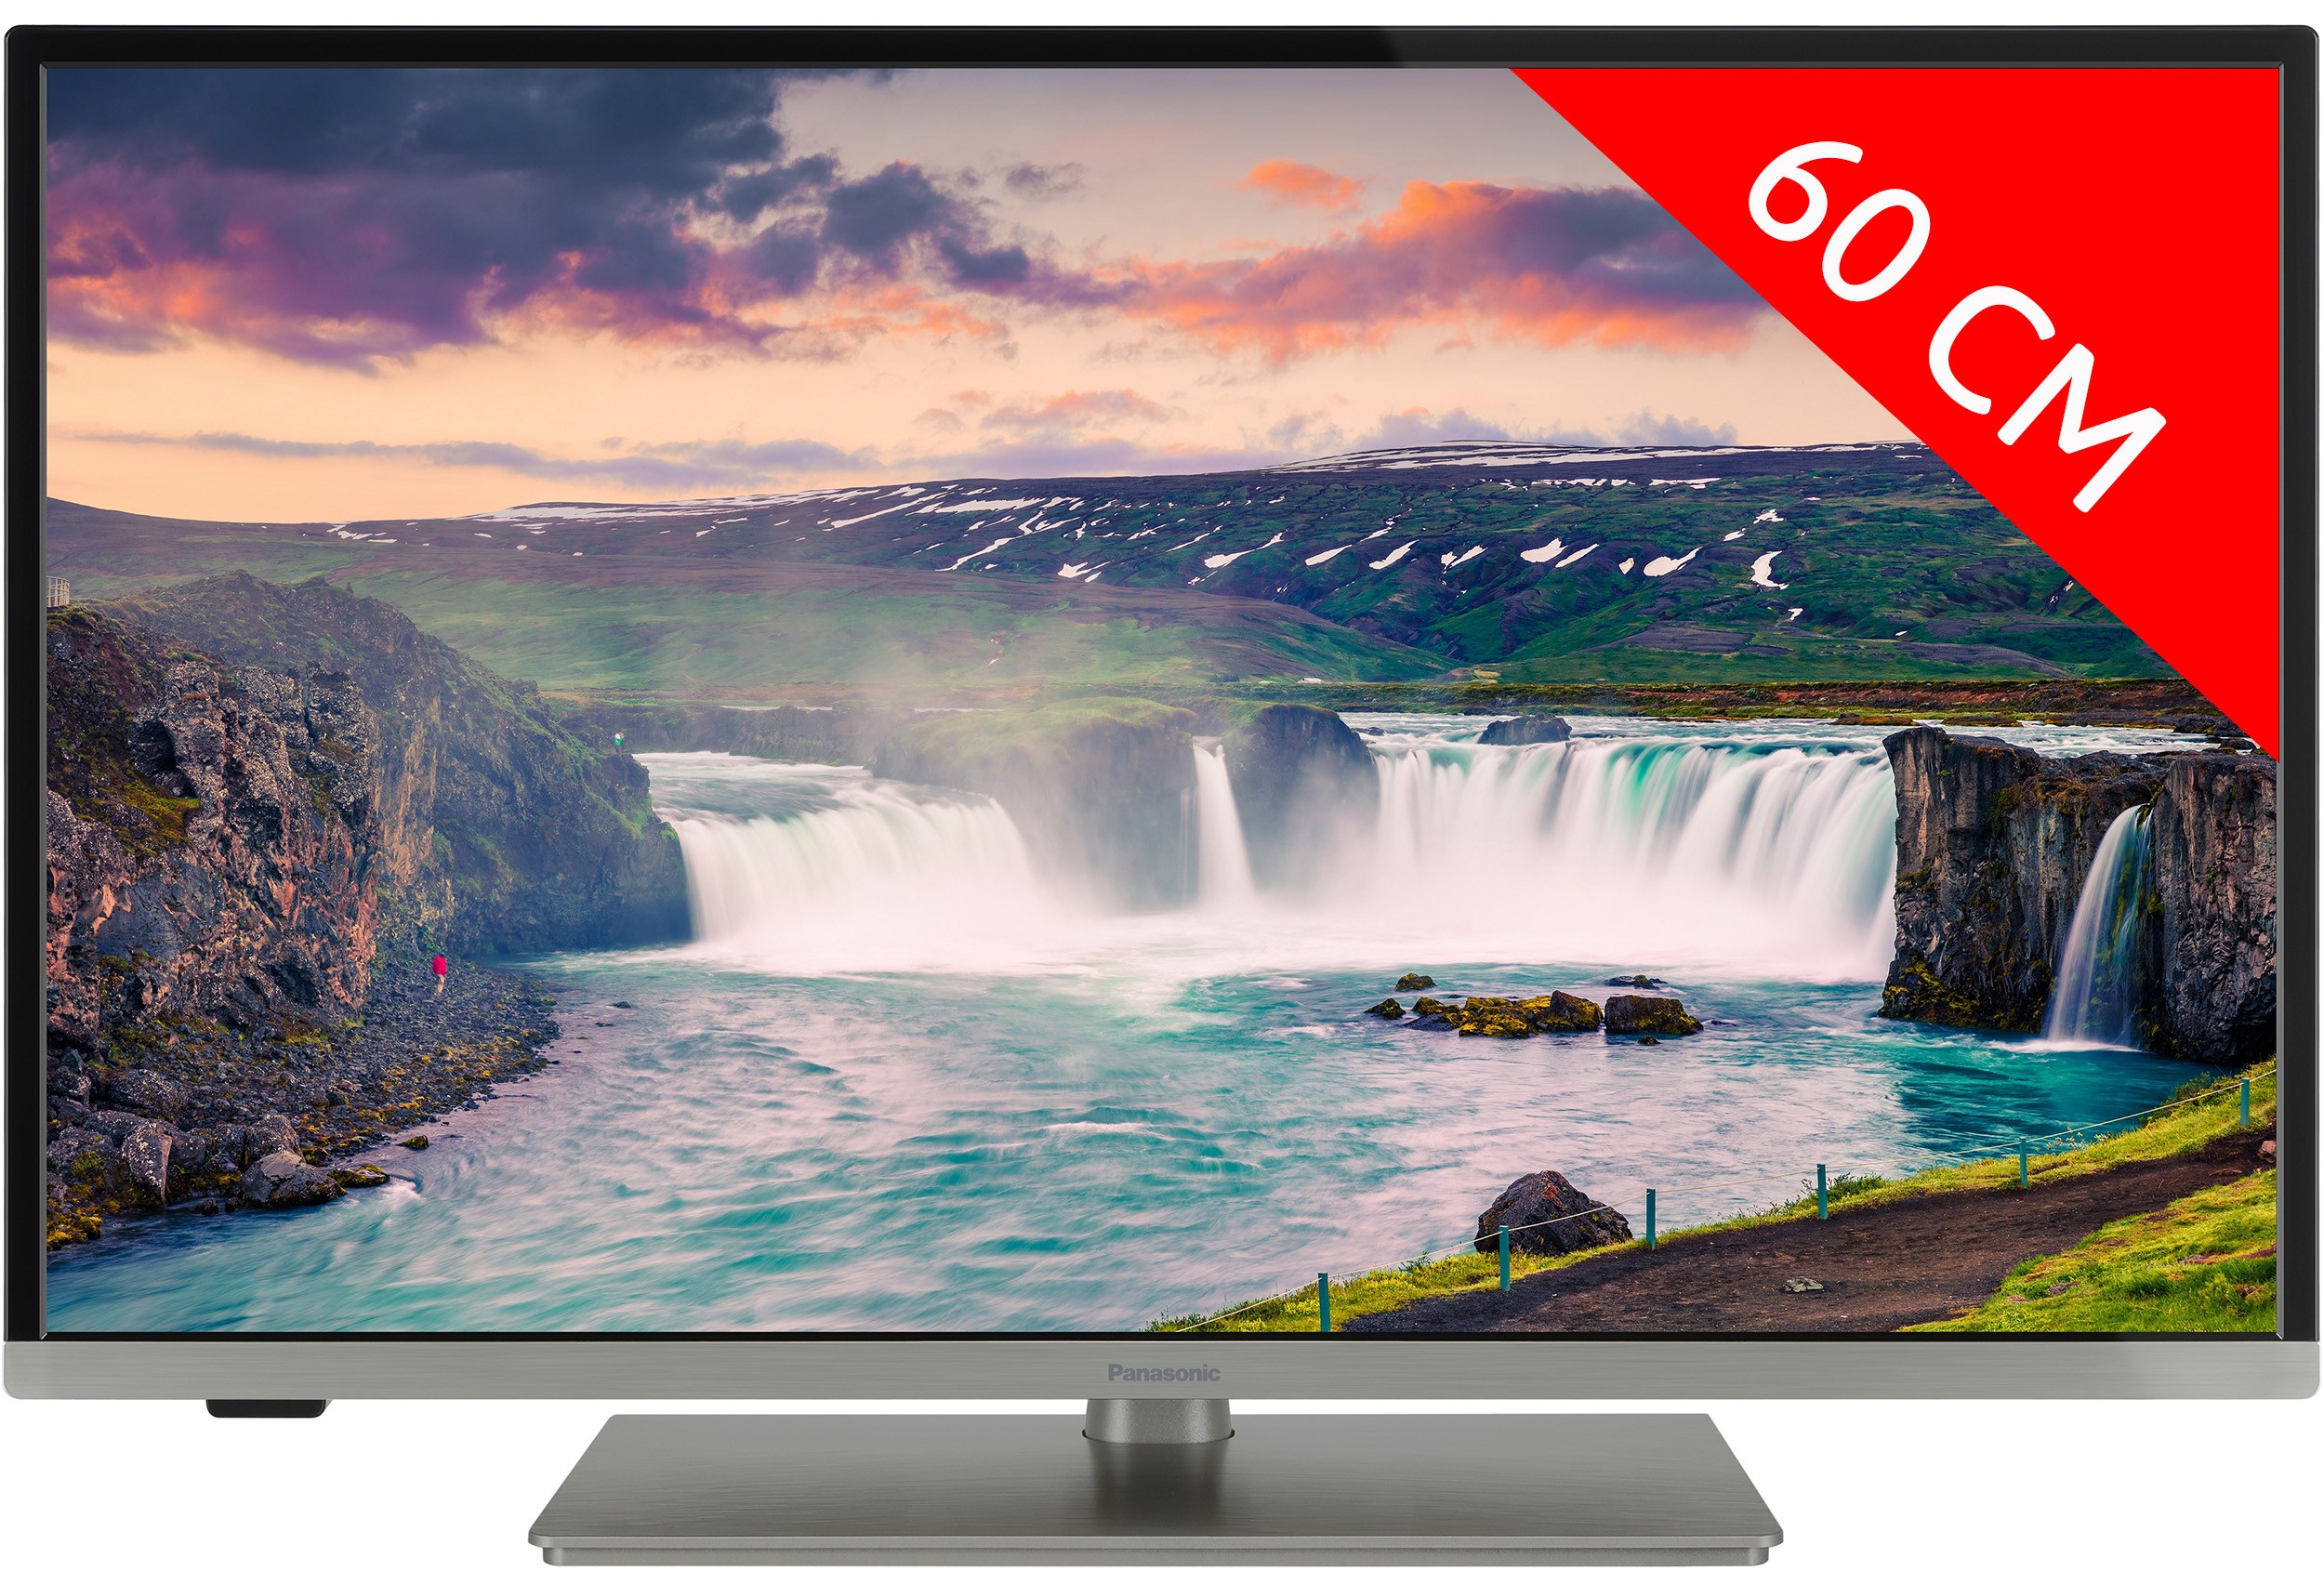 PANASONIC TV LCD 60 cm   TX-24MS350E